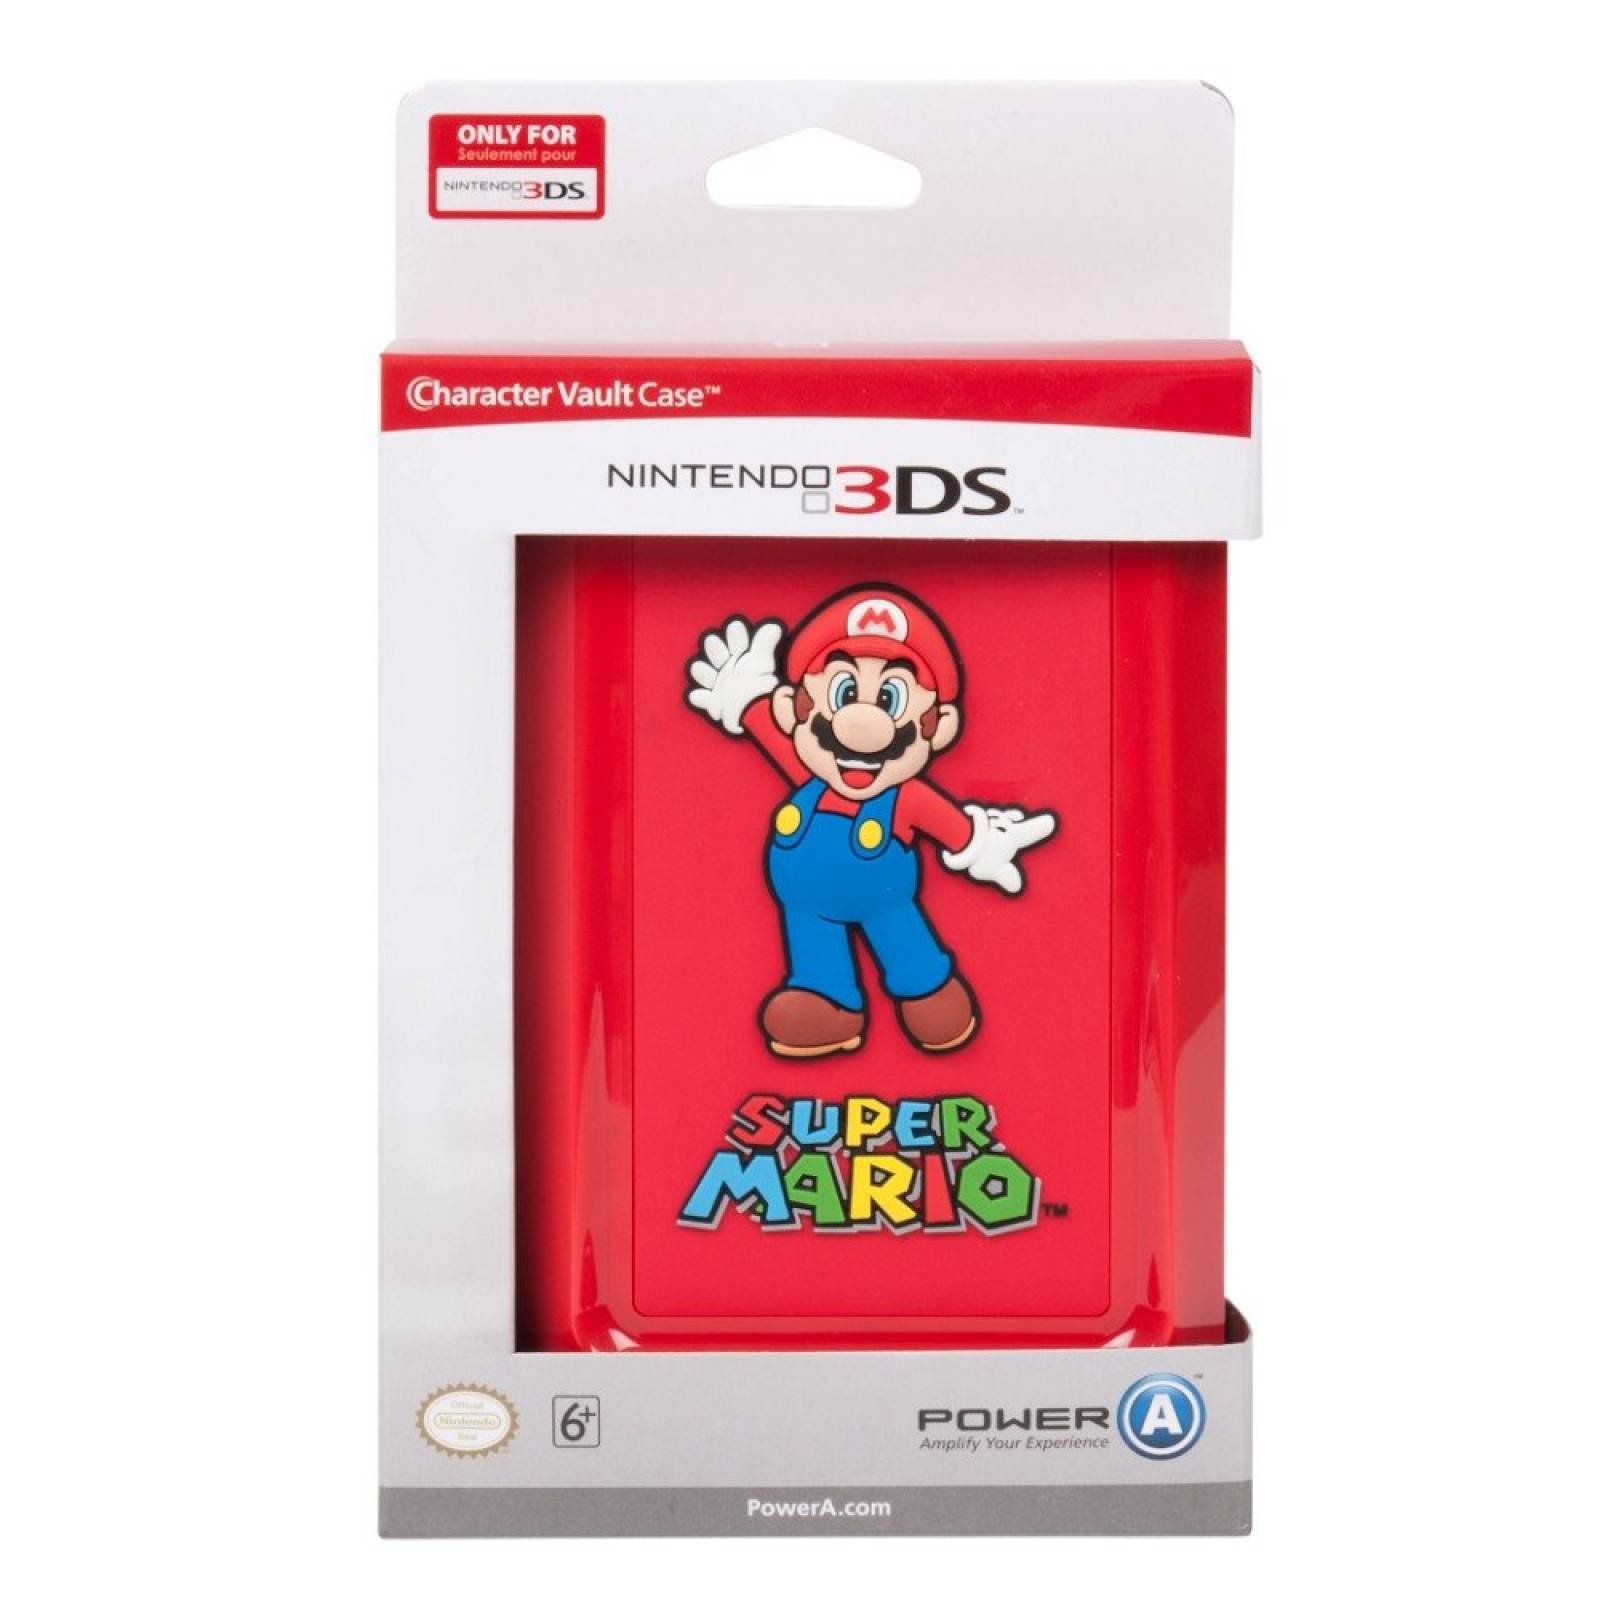 Protector 3DS Vault Case Super Mario PowerA